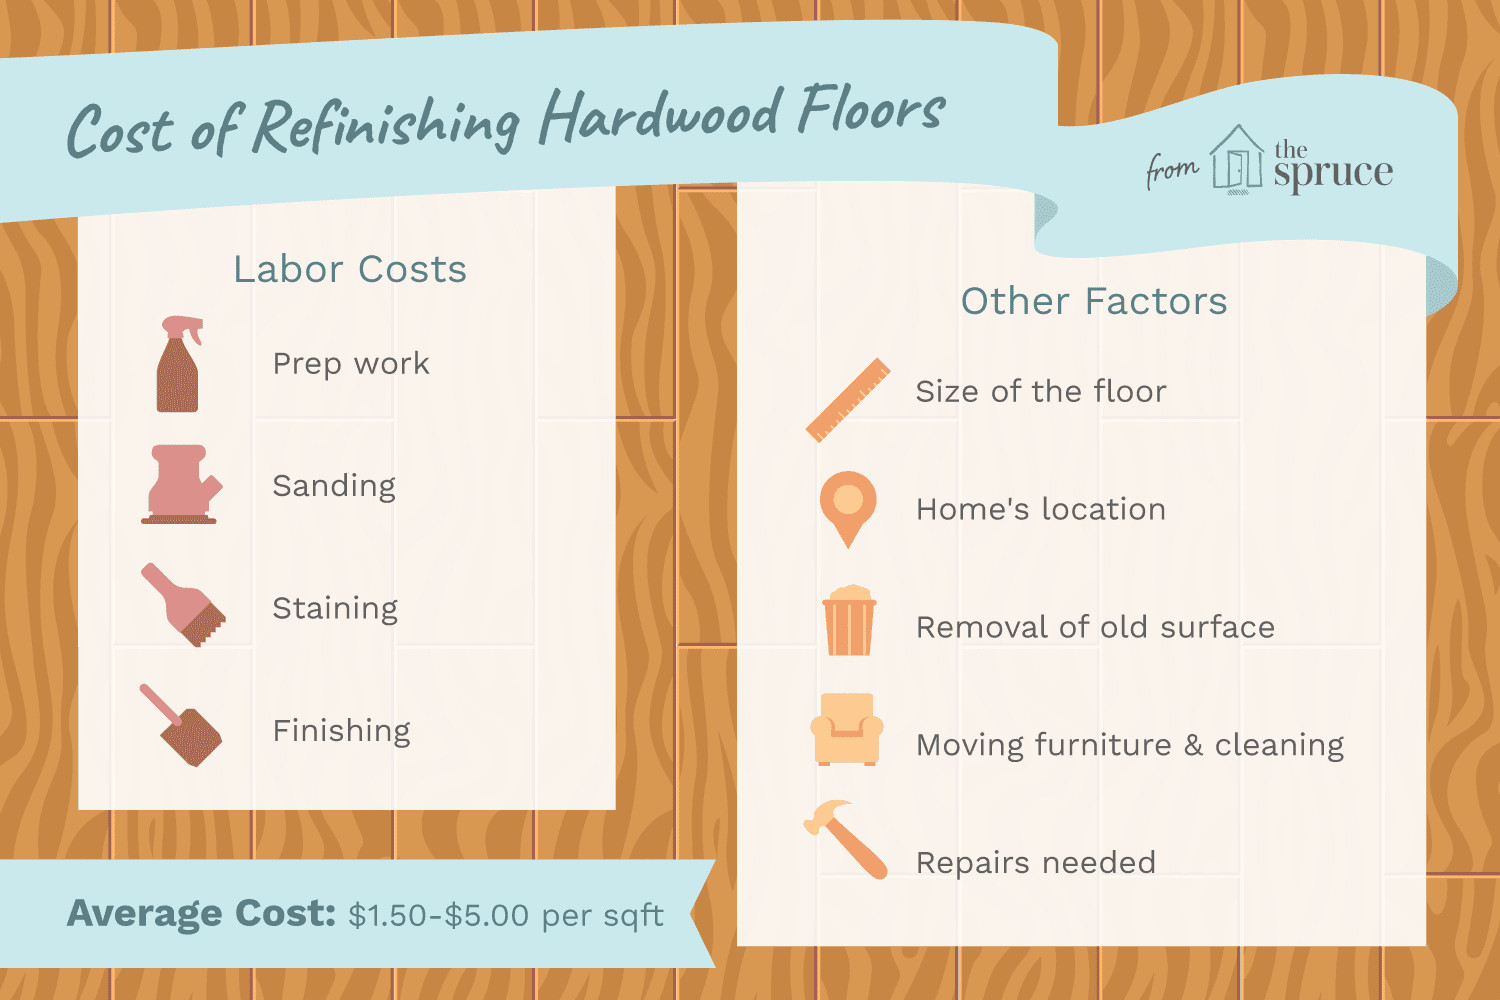 resurfacing prefinished hardwood floors of the cost to refinish hardwood floors in cost to refinish hardwood floors 1314853 final 5bb6259346e0fb0026825ce2